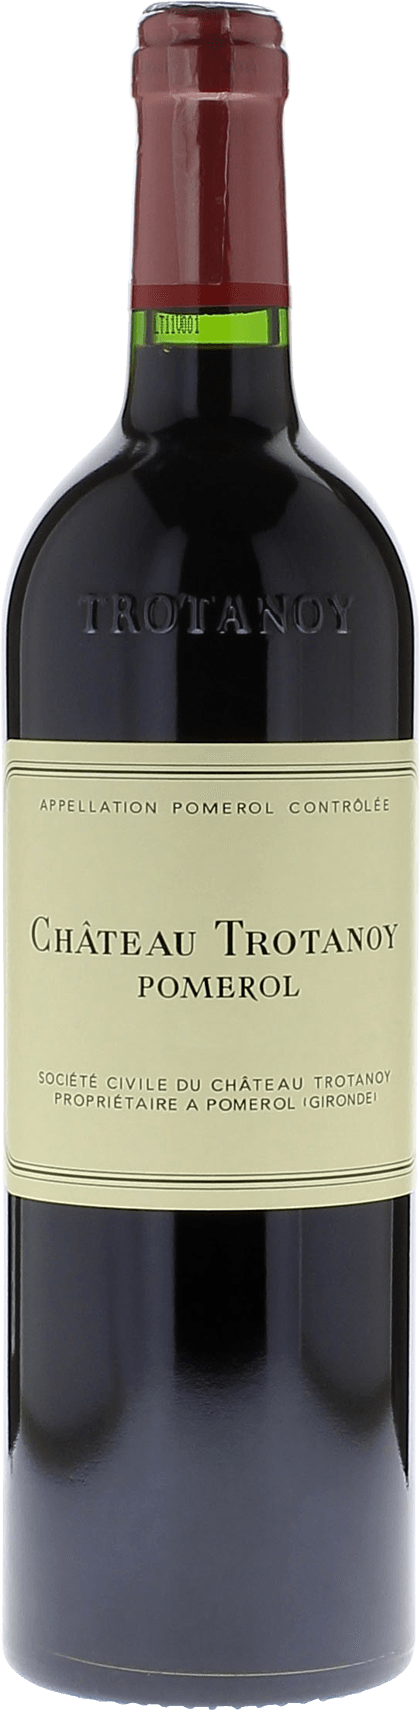 Trotanoy 1994  Pomerol, Bordeaux rouge